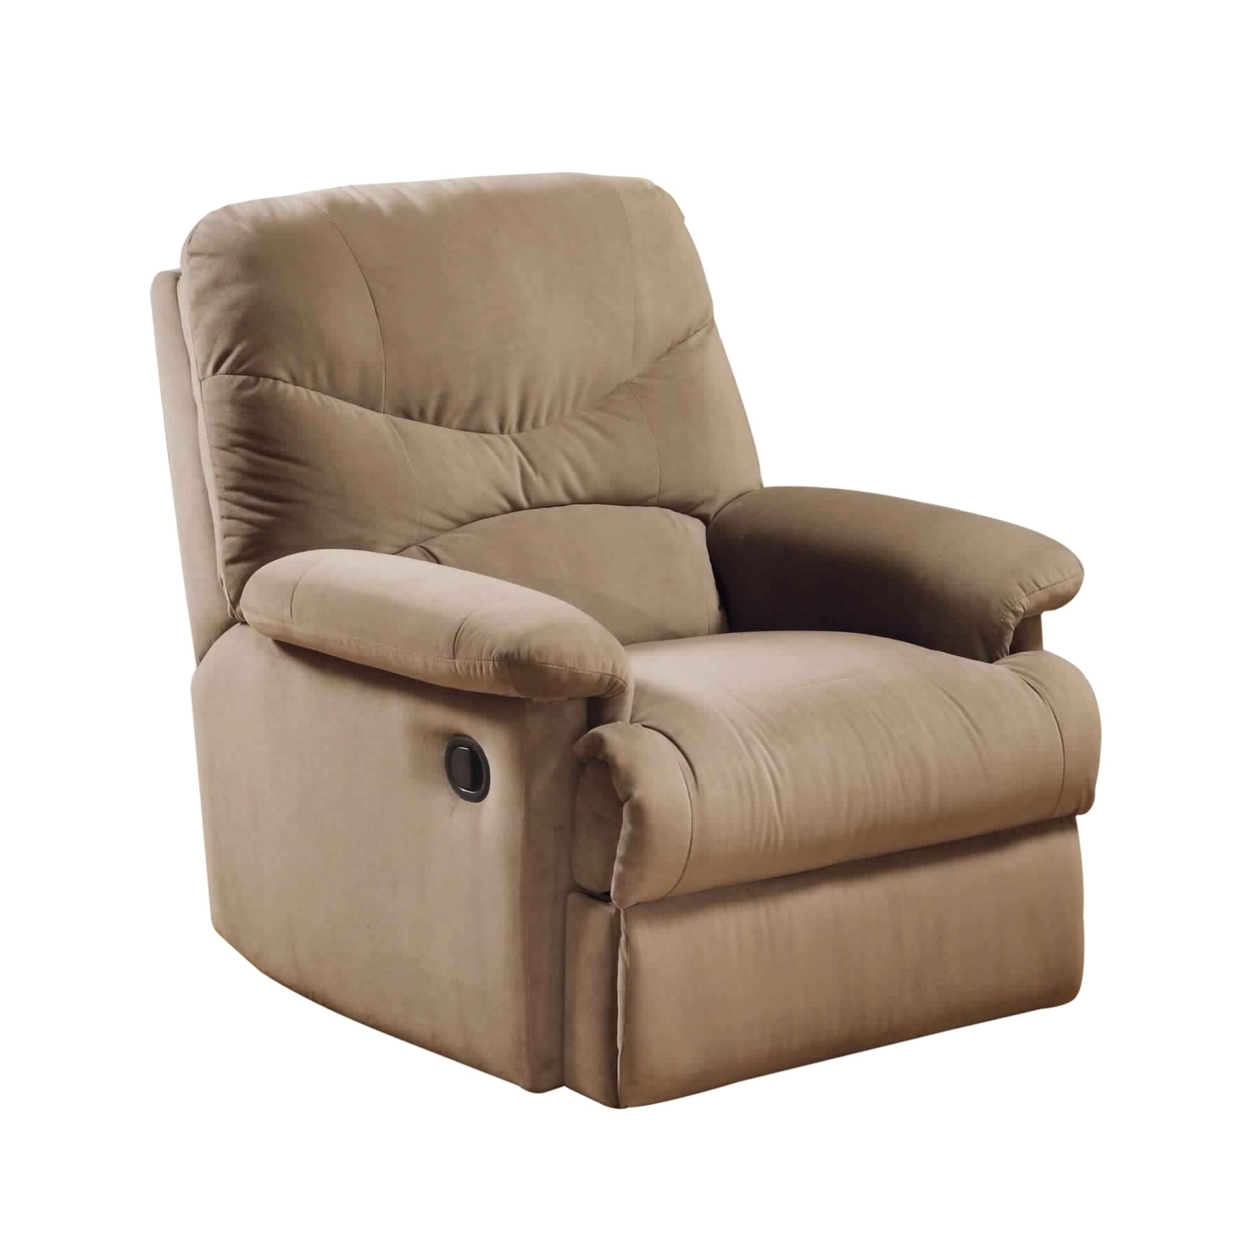 Deby 35 Inch Modern Motion Recliner Chair, Soft Microfiber Seat, Brown- Saltoro Sherpi